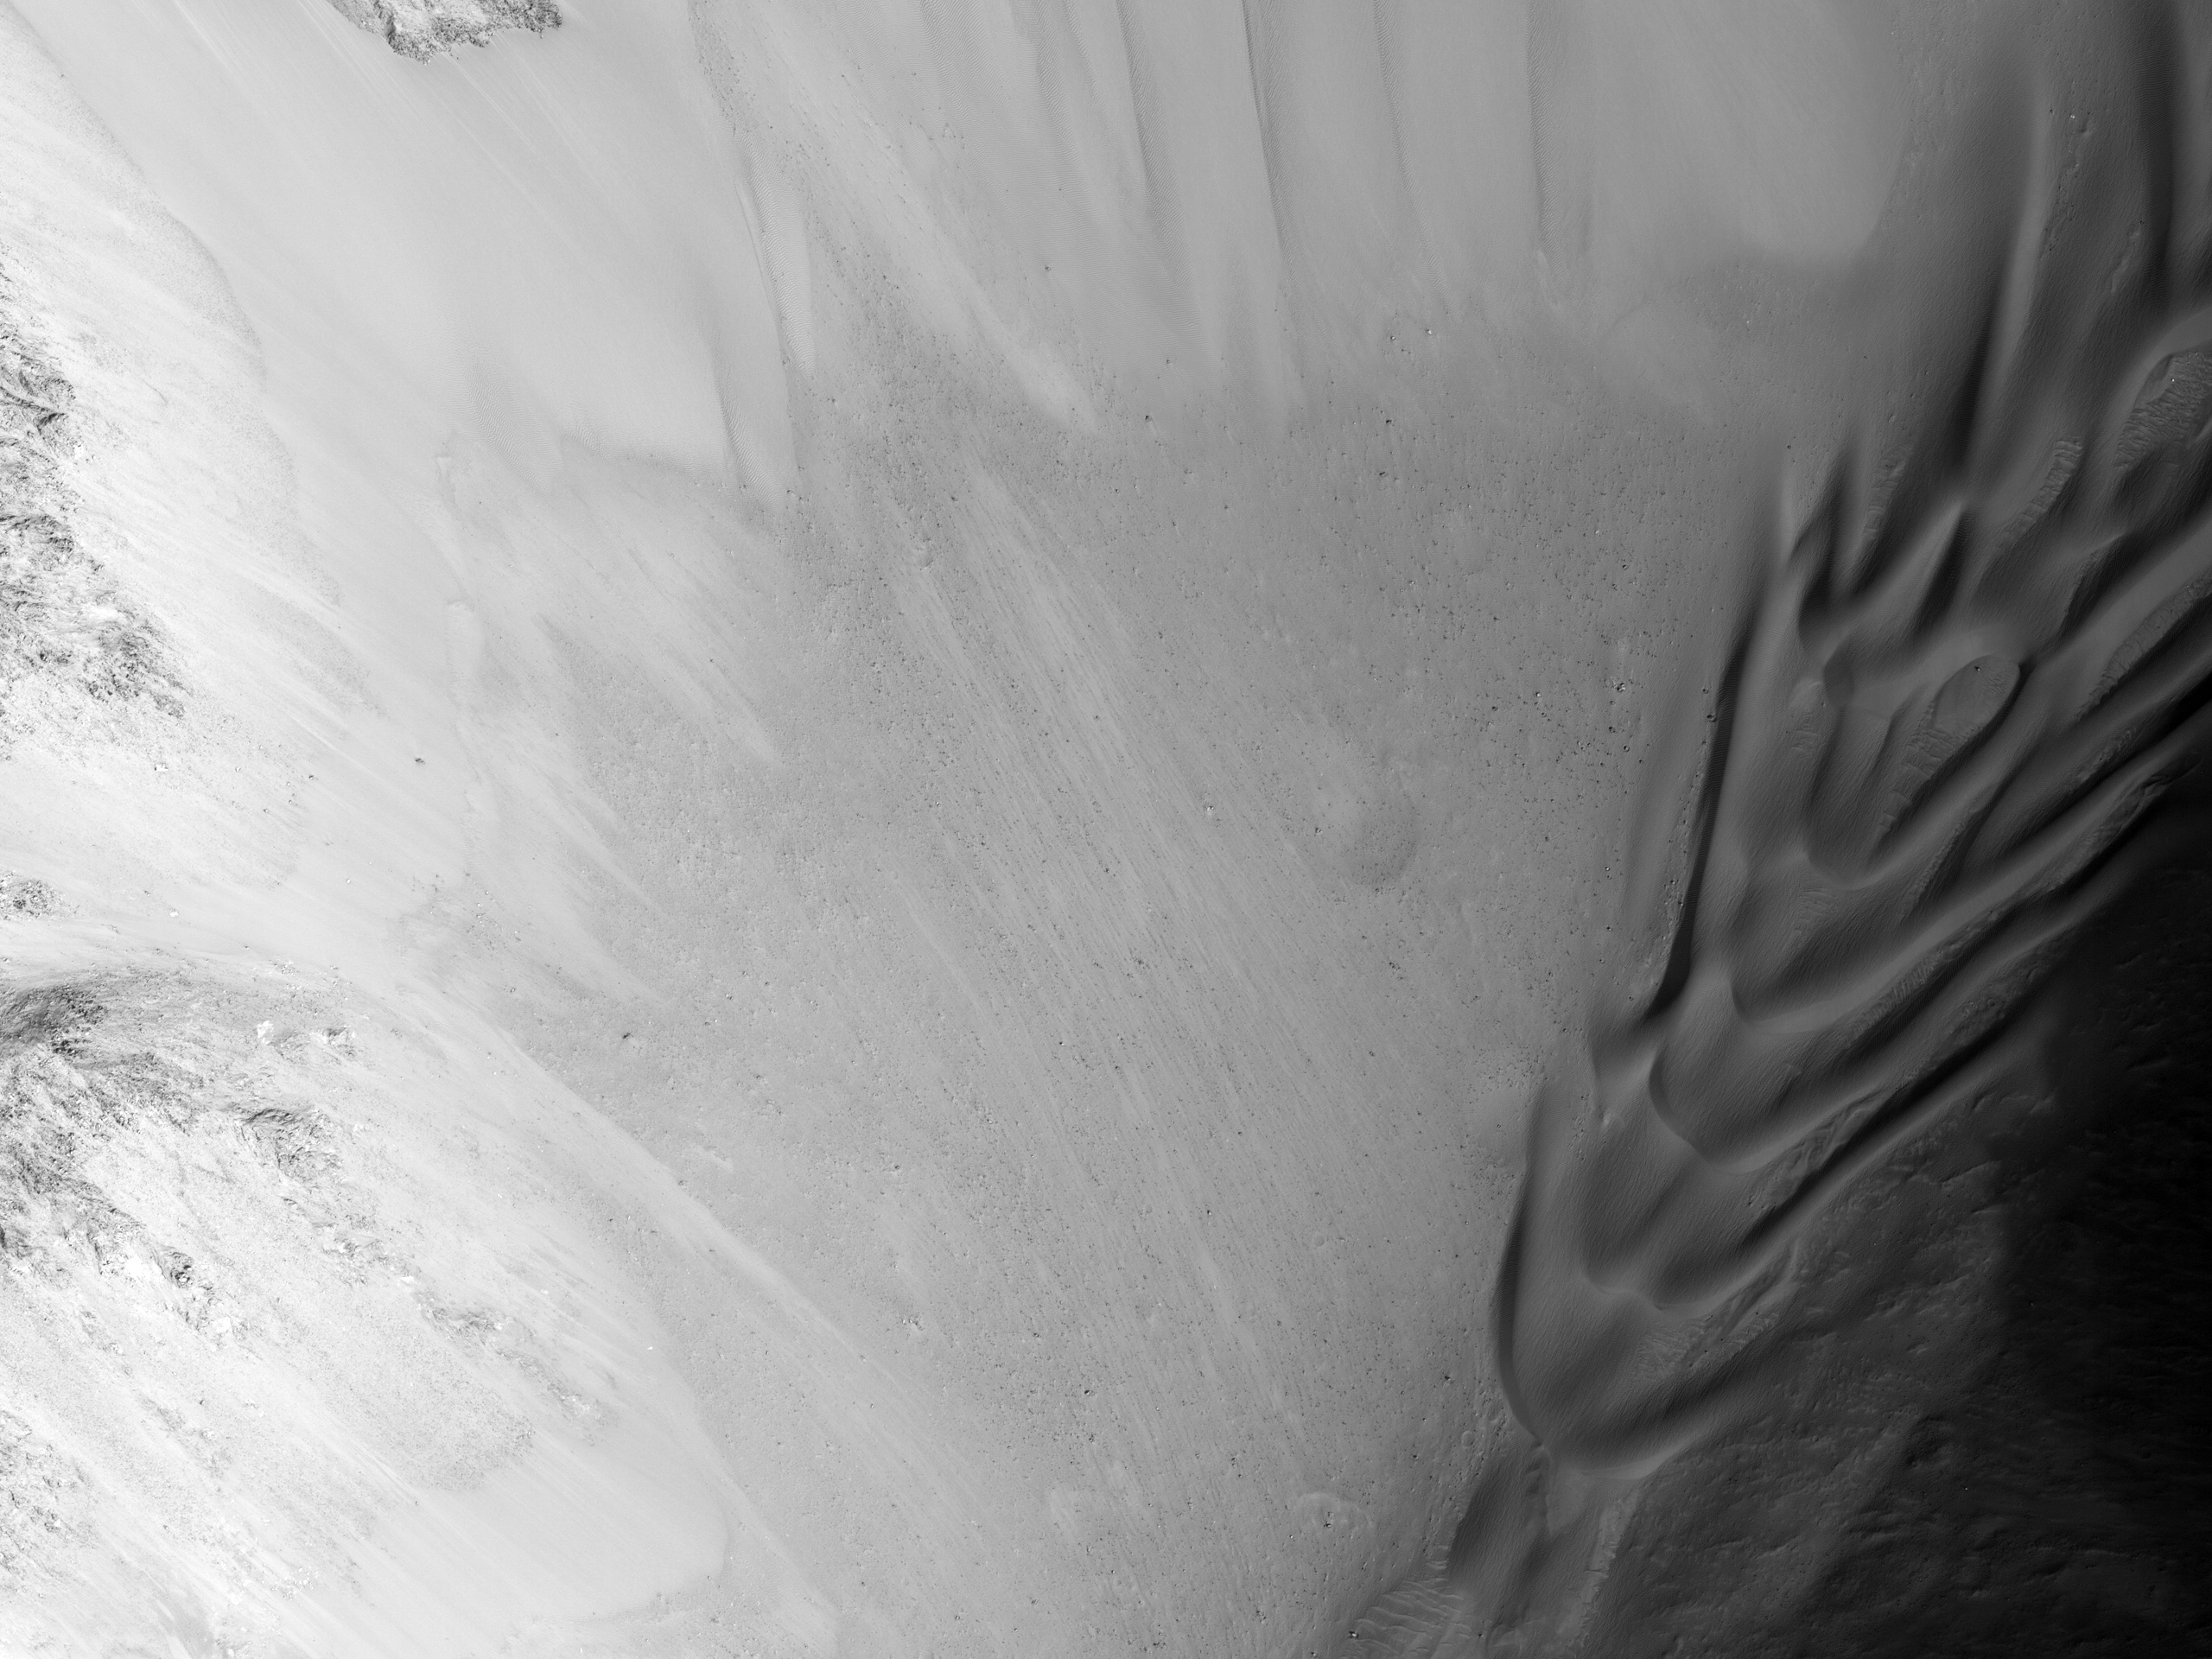 Eastern Valles Marineris Bedrock Stratigraphy and Falling Dunes